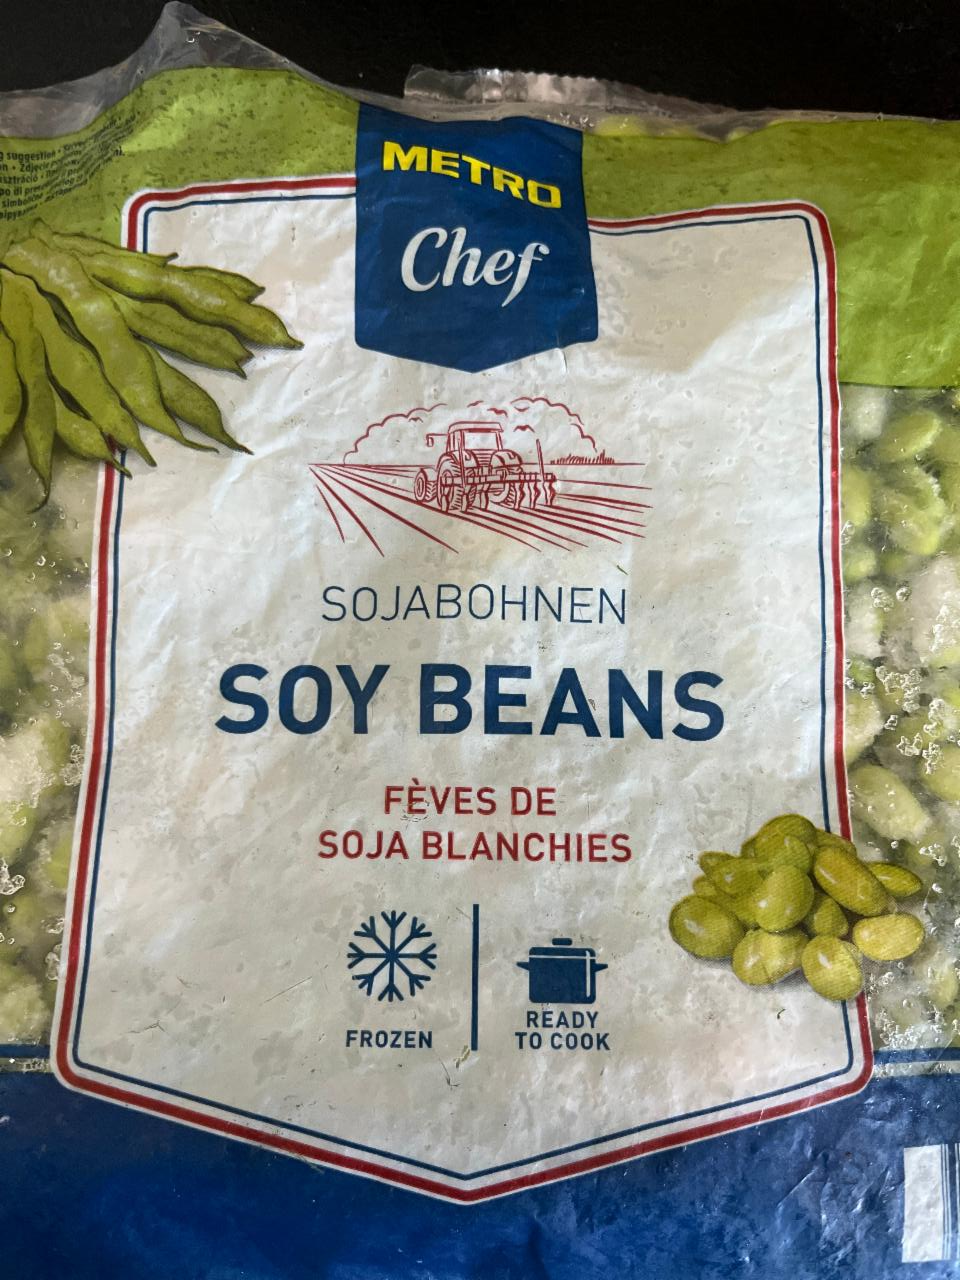 Фото - Соевые бобы Soy Beans Metro Chef